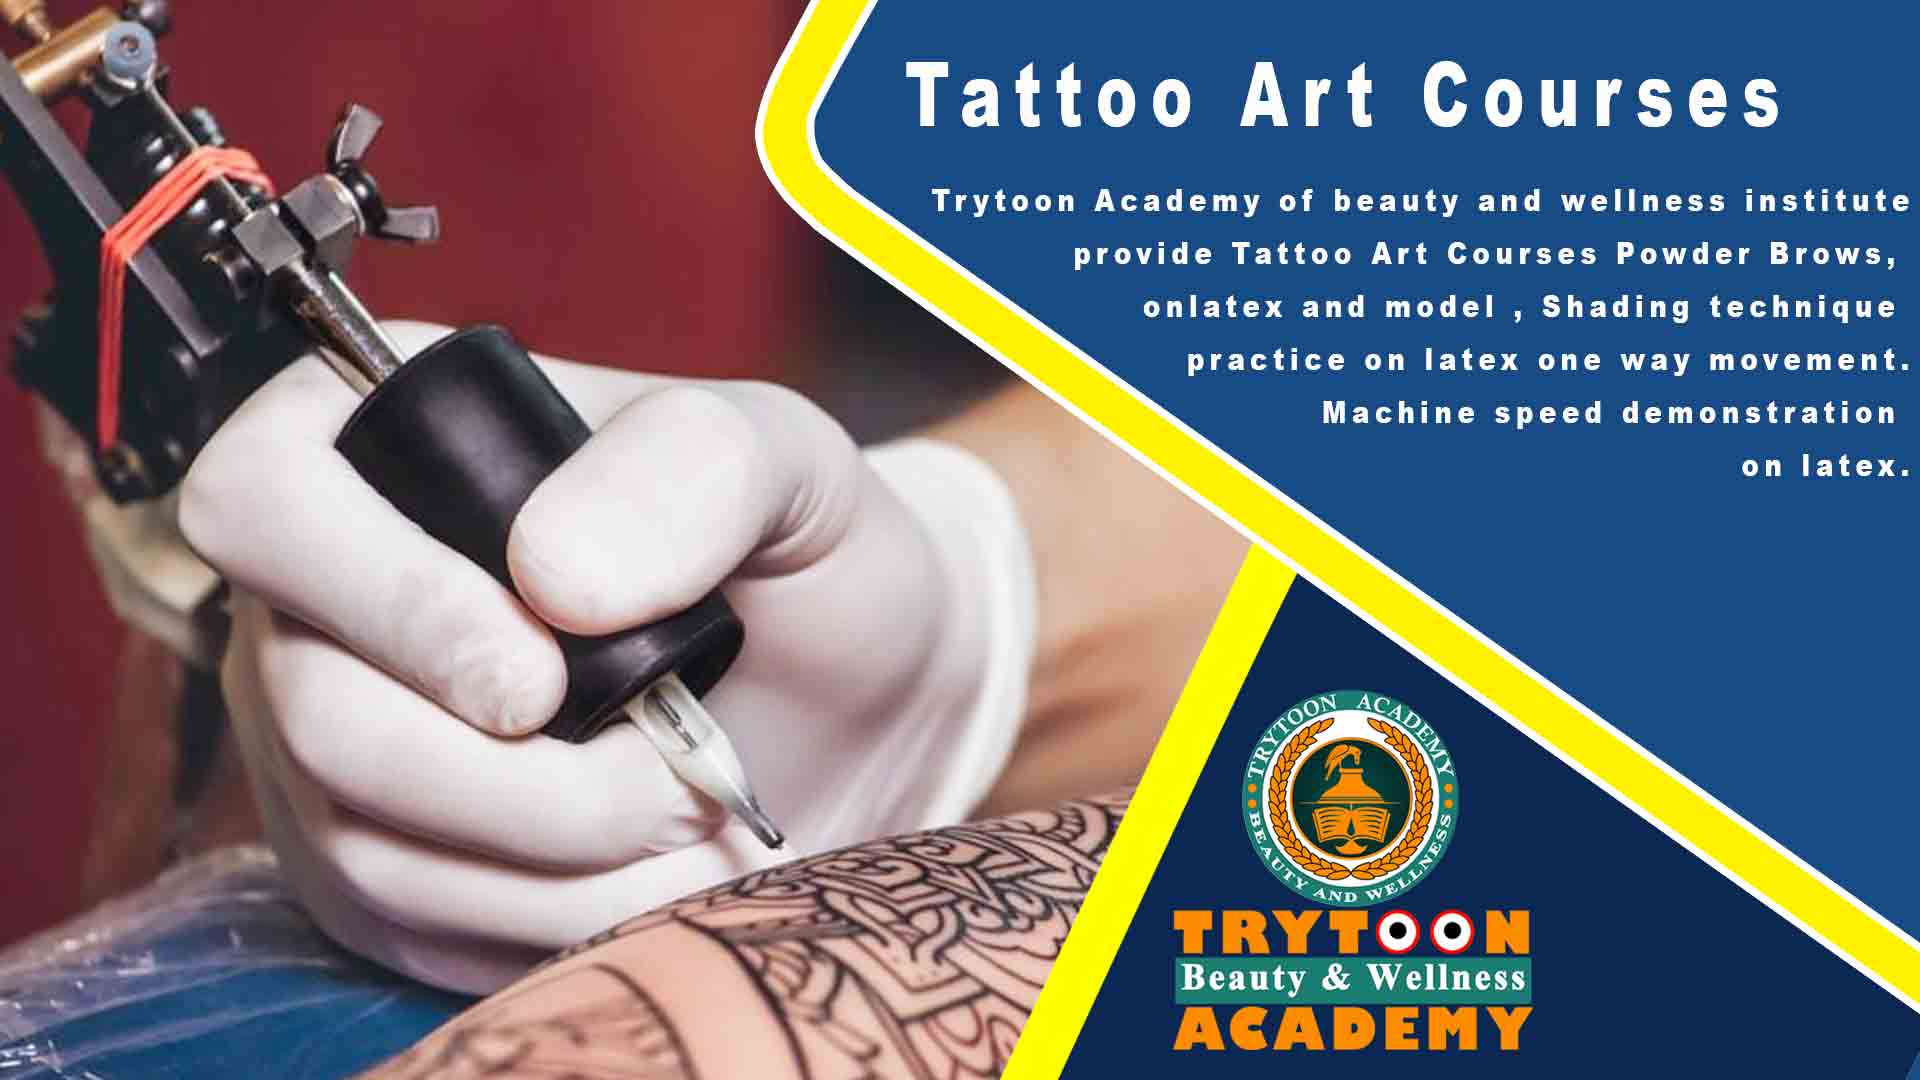 Tattoo Art Course